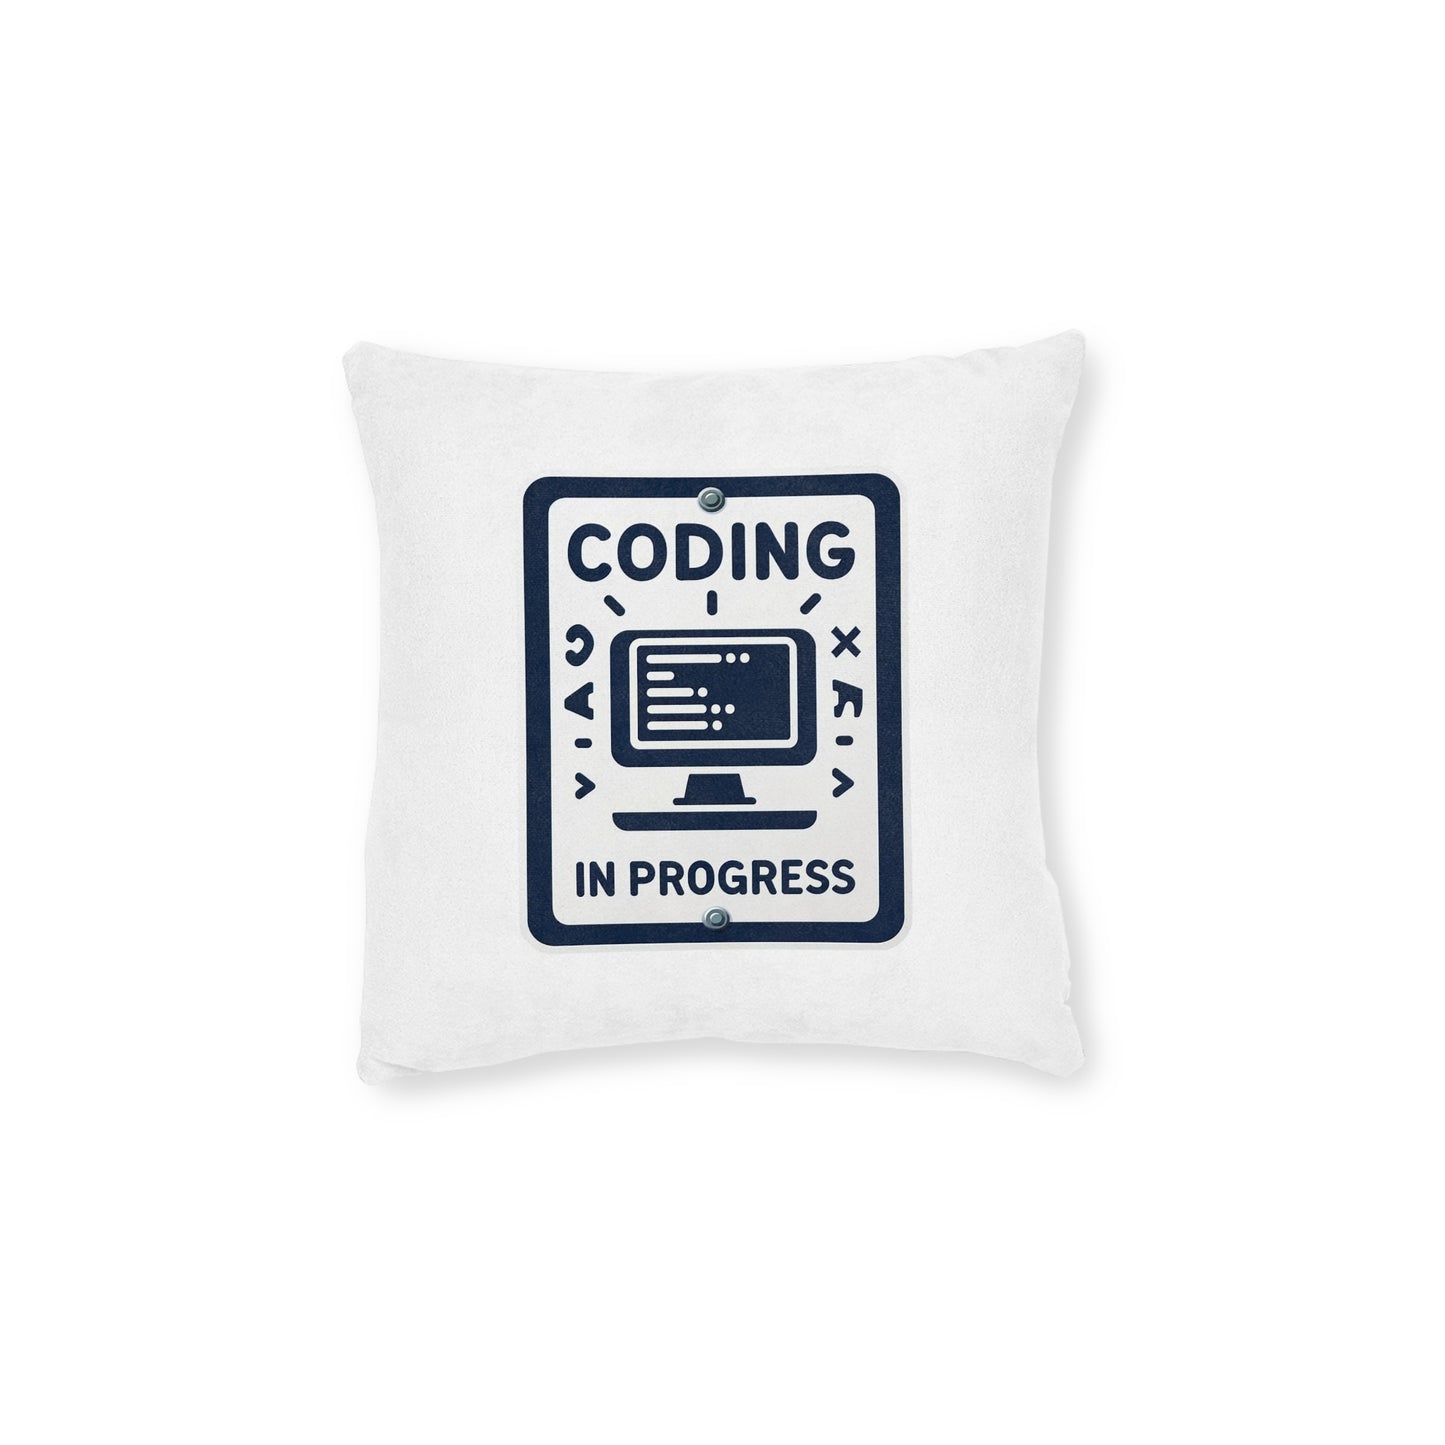 Coding In Progress - Square Pillow